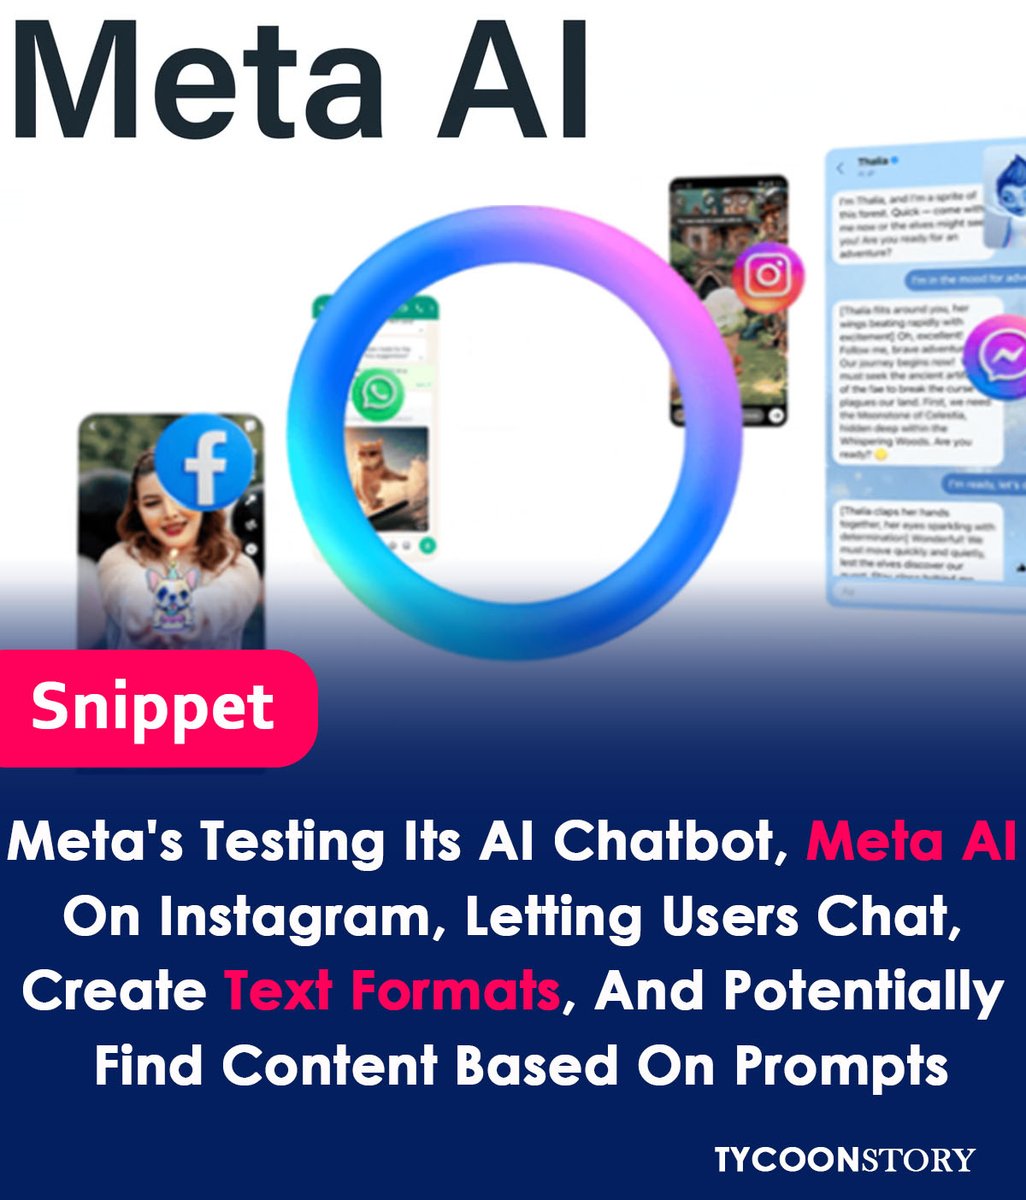 Meta is testing its AI chatbot, Meta AI, on Instagram
#MetaAI #Chatbot #Instagram #GenerativeAI #Poetry #Graphics #TechCrunch #Engadget #SocialMedia #Facebook #WhatsApp #LLM #Llama2 #Bing #MetaConnect2023 #RealTimeAI #InformationRetrieval @Meta  @instagram @AIatMeta